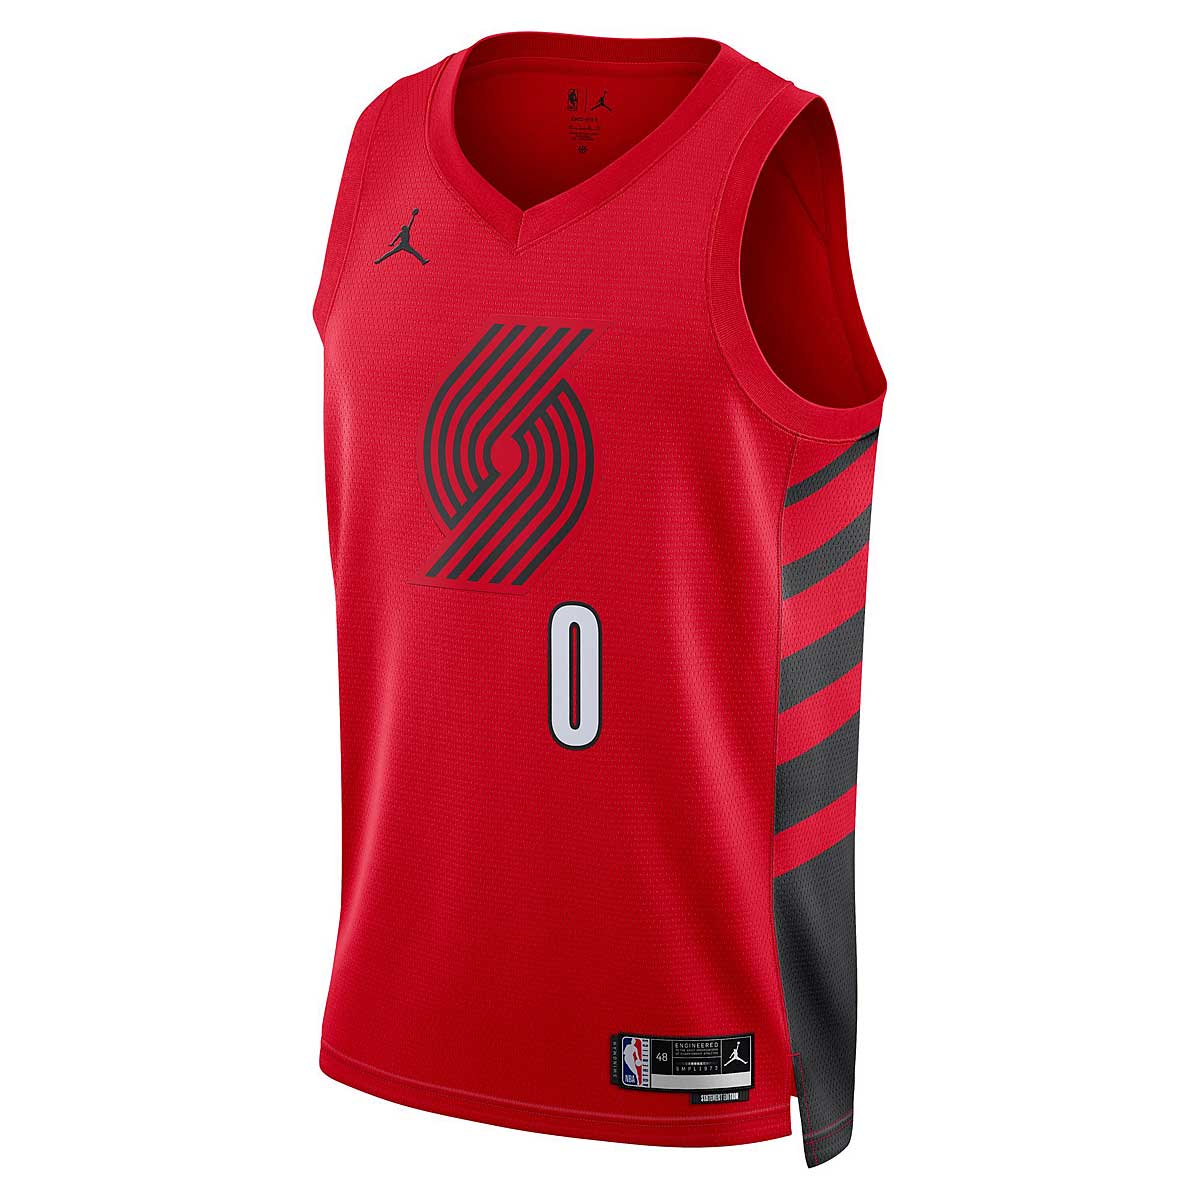 Nike Performance NBA Chicago Bulls START5 Club Wear, Men's, Size: Large, Black/University Red